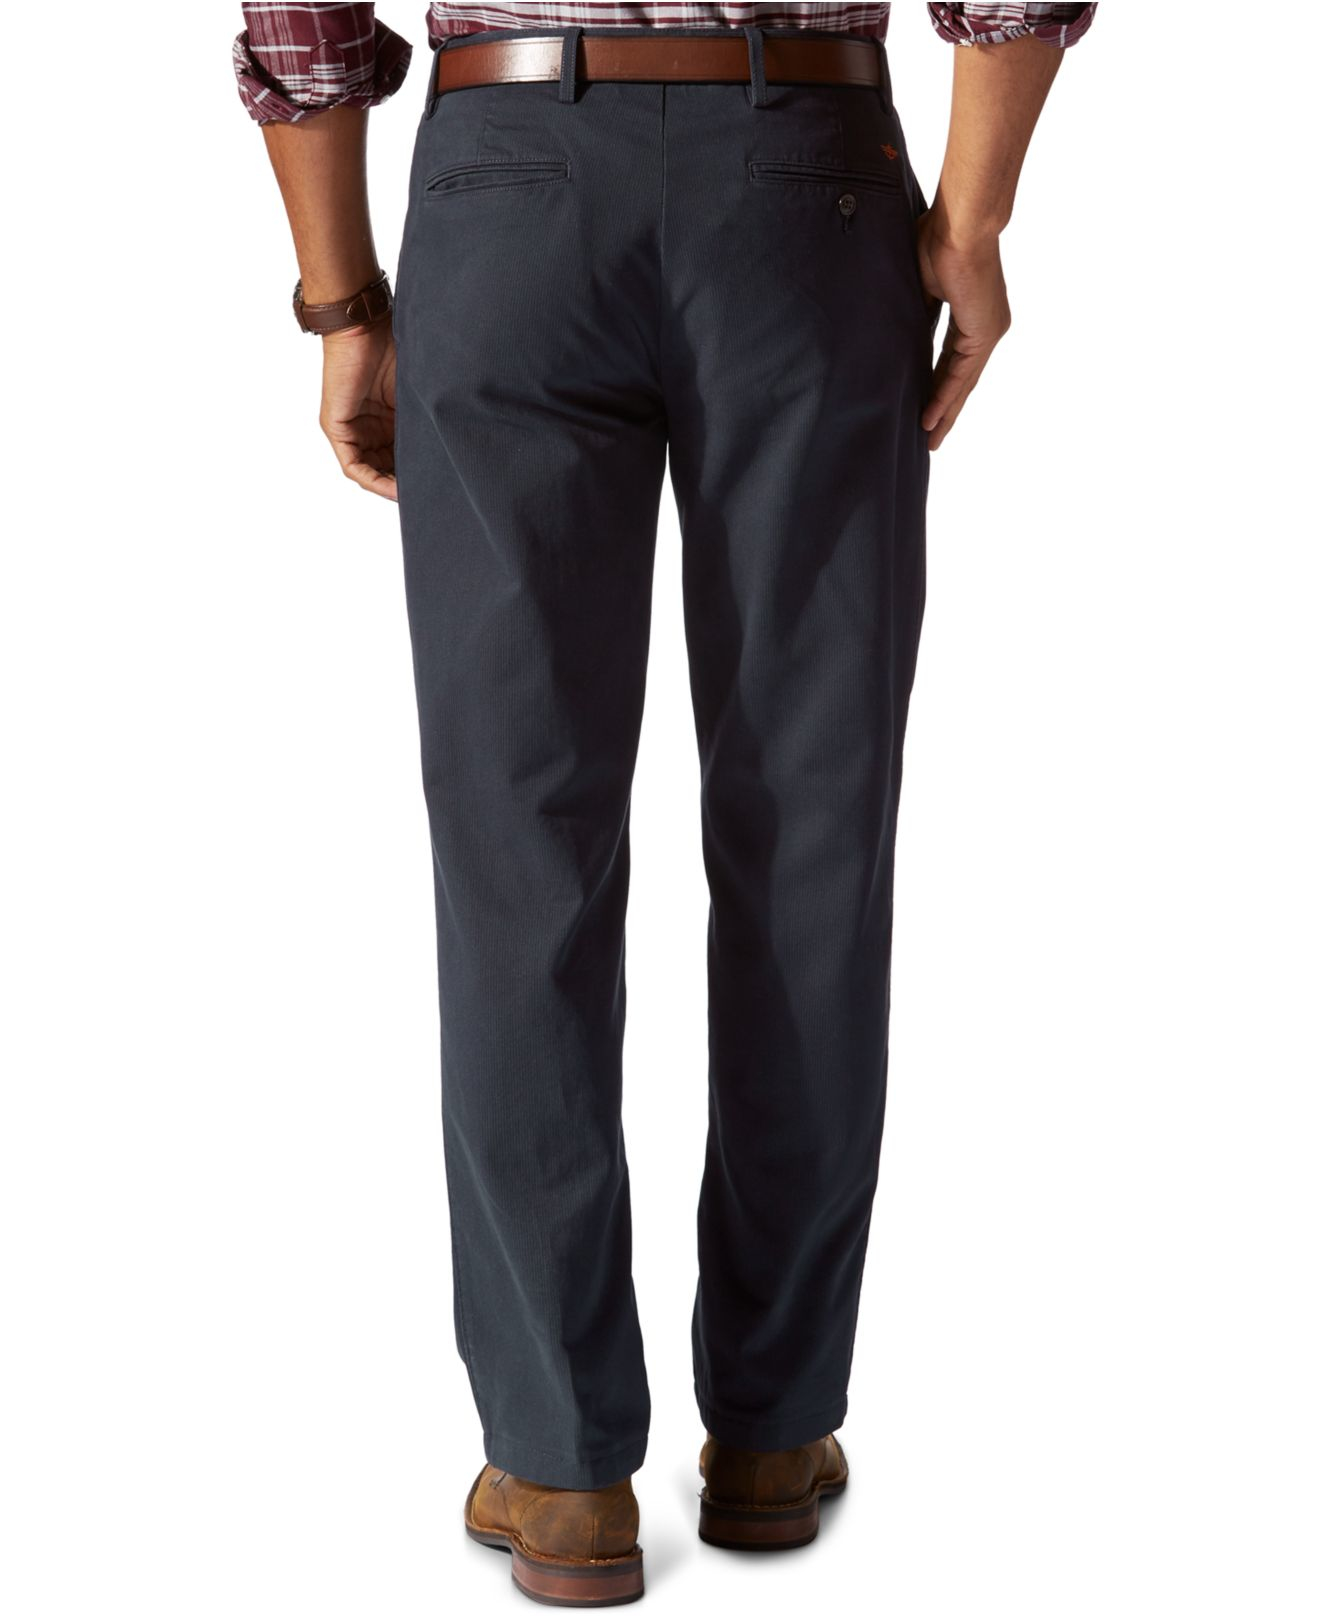 Lyst - Dockers D3 Classic-fit Flat-front Field Khaki Pants in Blue for Men